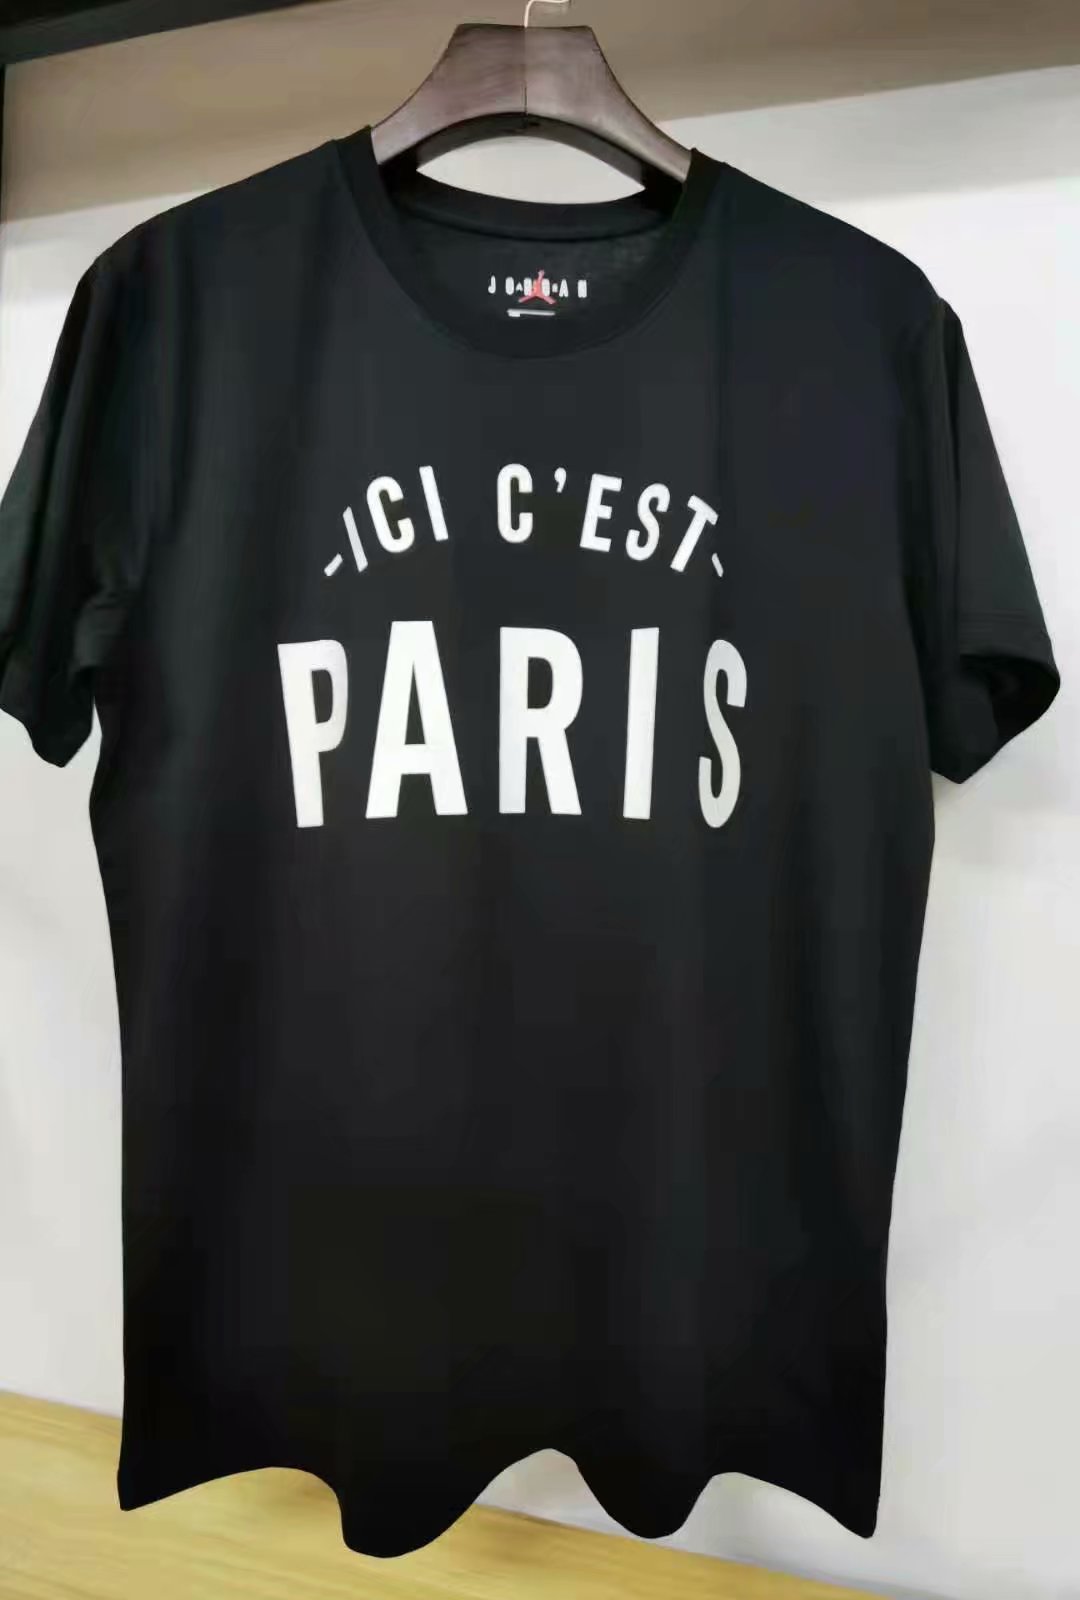 PSG Messi ICI C'EST PARIS T-Shirt Black Mens 2021/22